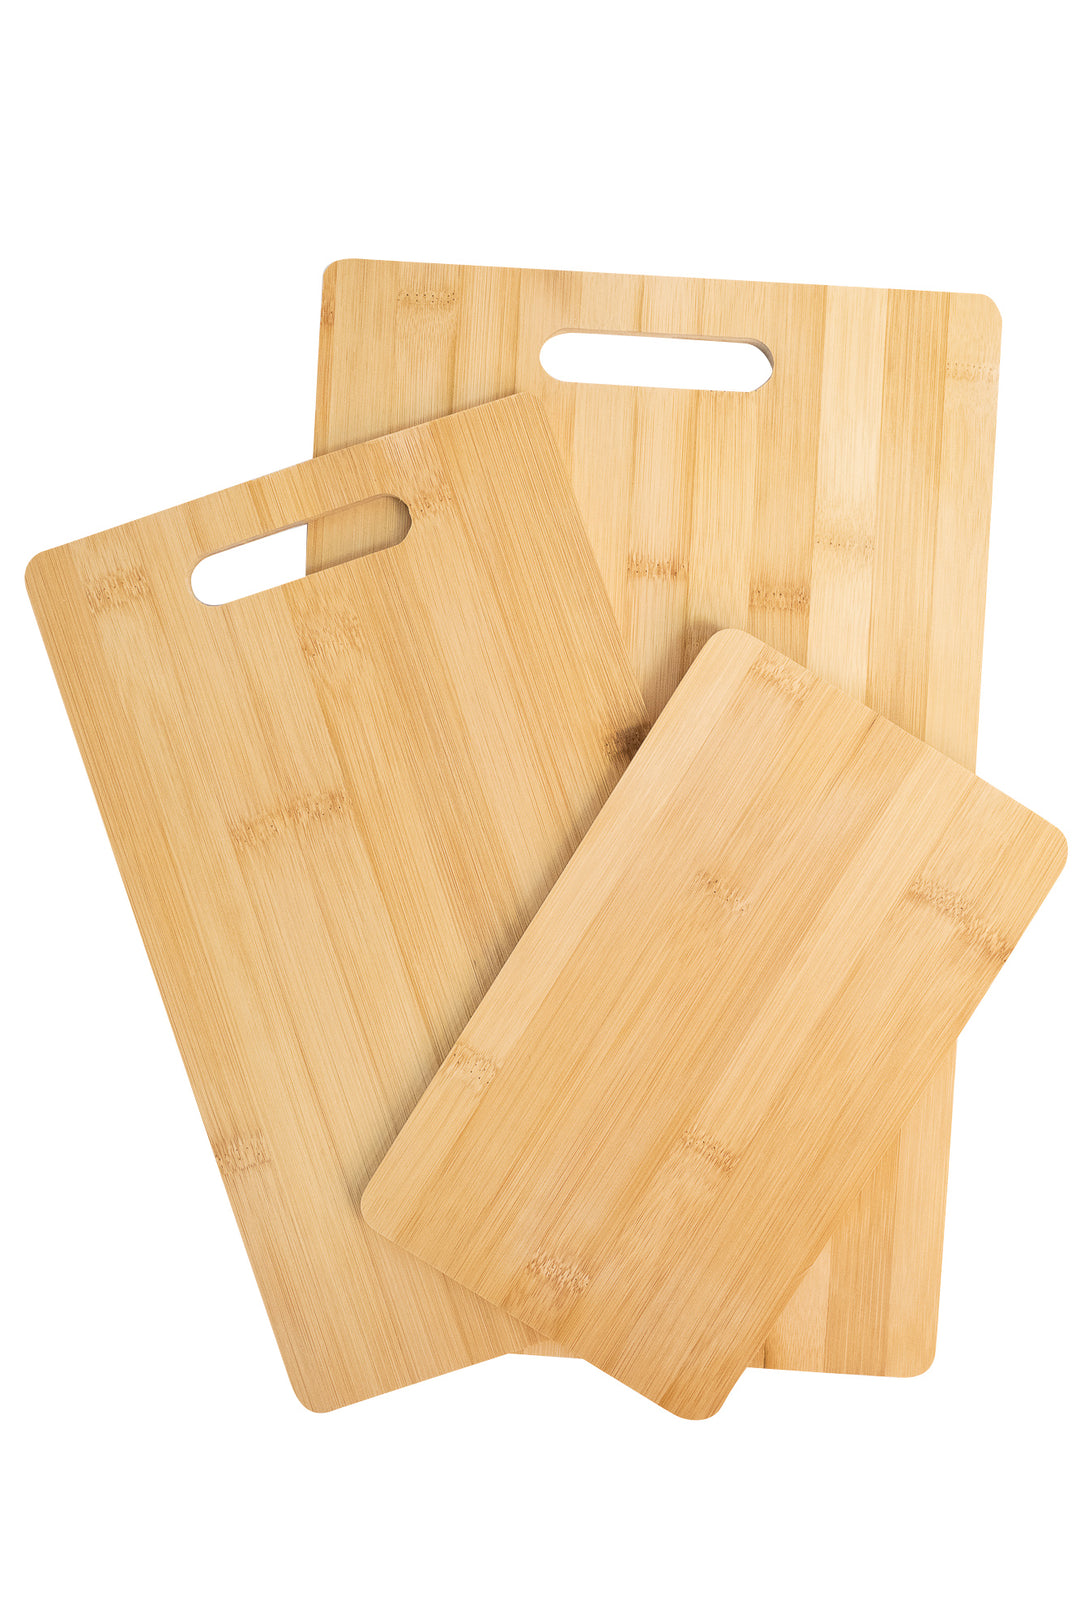 Lexi Home 3-Piece Bamboo Cutting Board Set